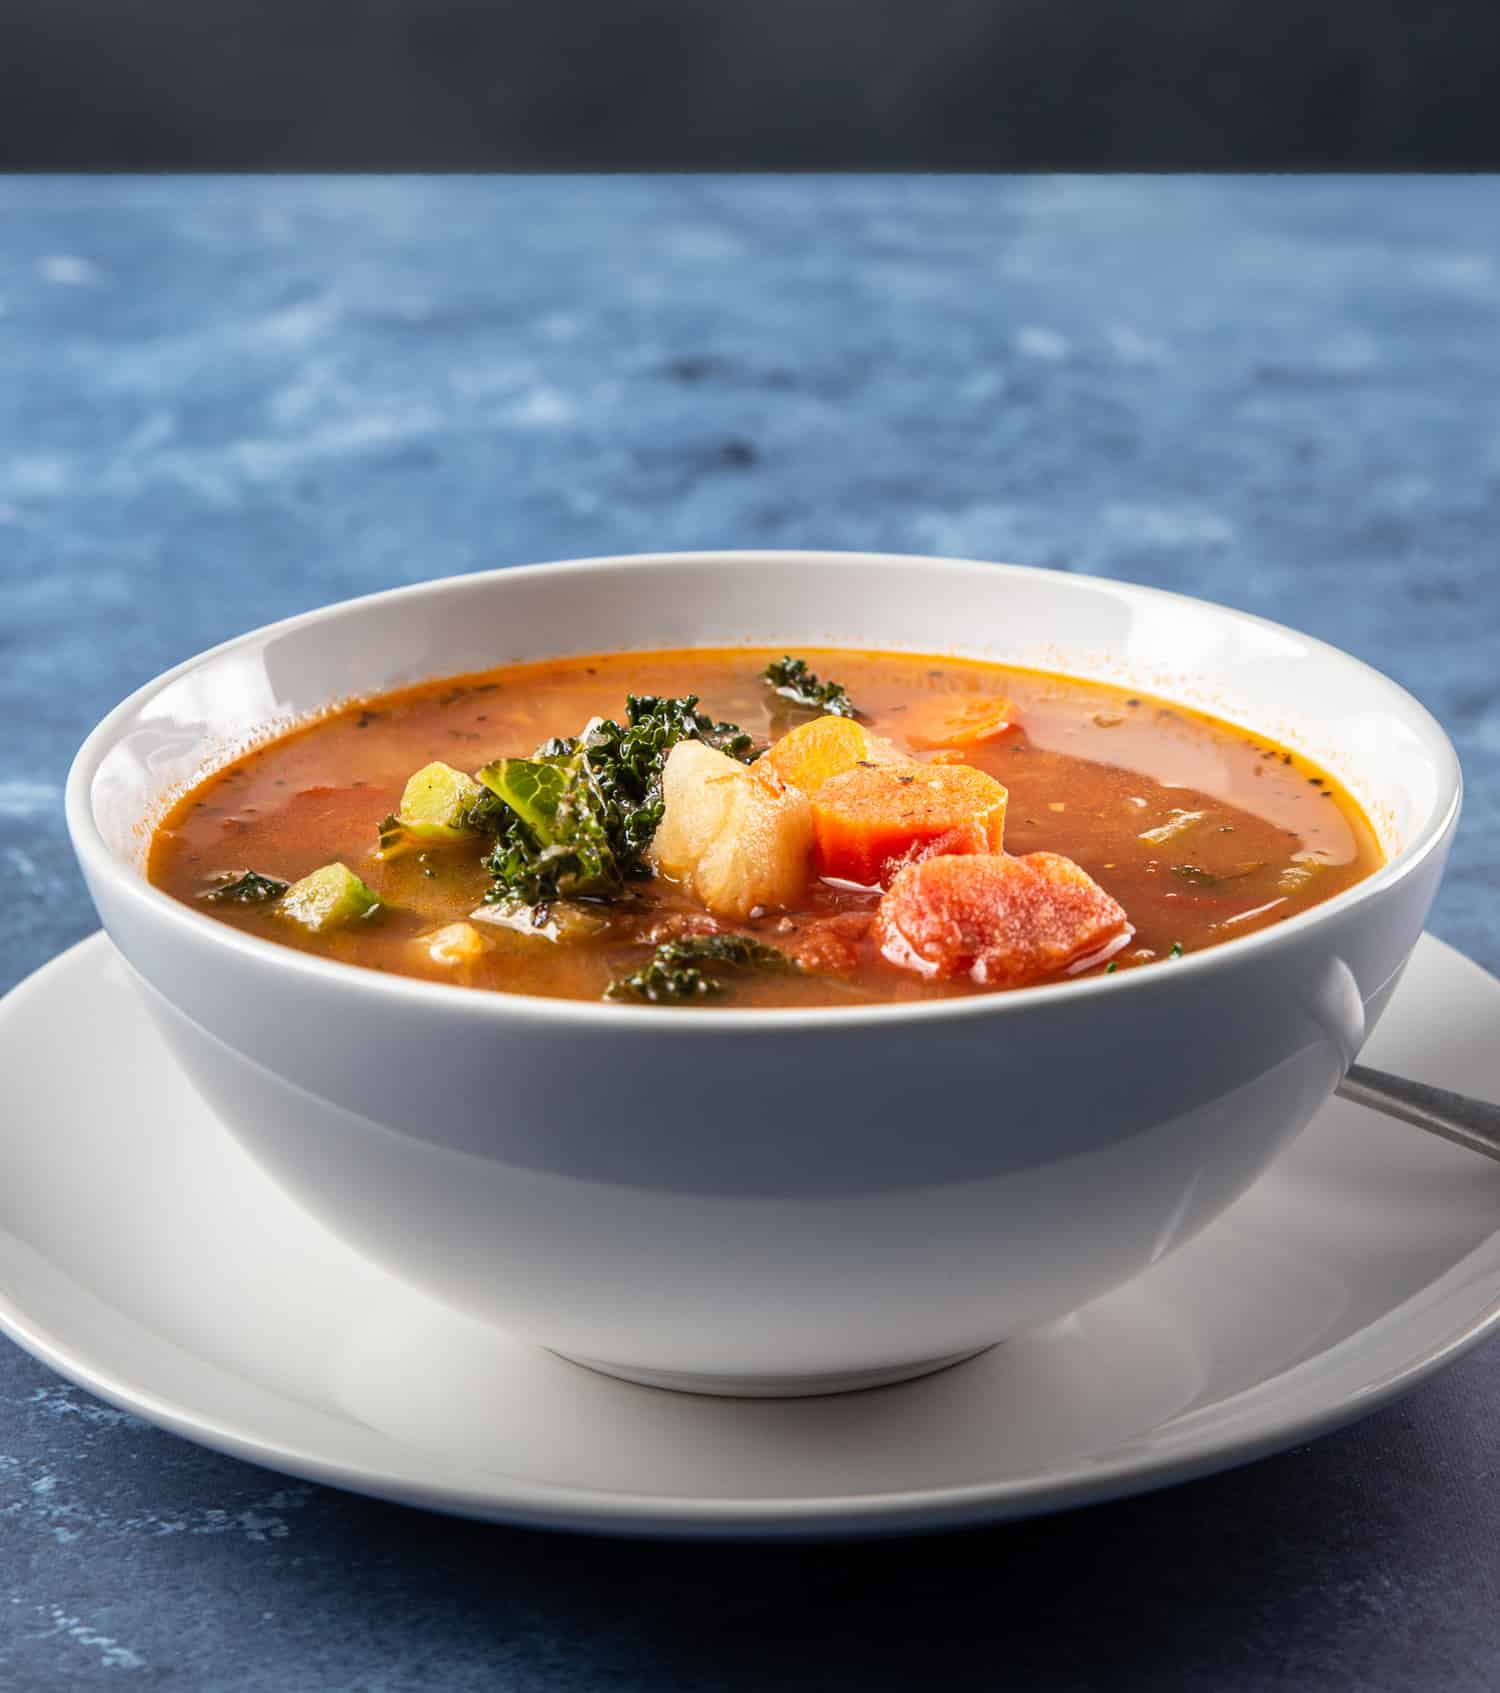 https://www.pressurecookrecipes.com/wp-content/uploads/2021/03/vegetable-soup-recipe.jpg